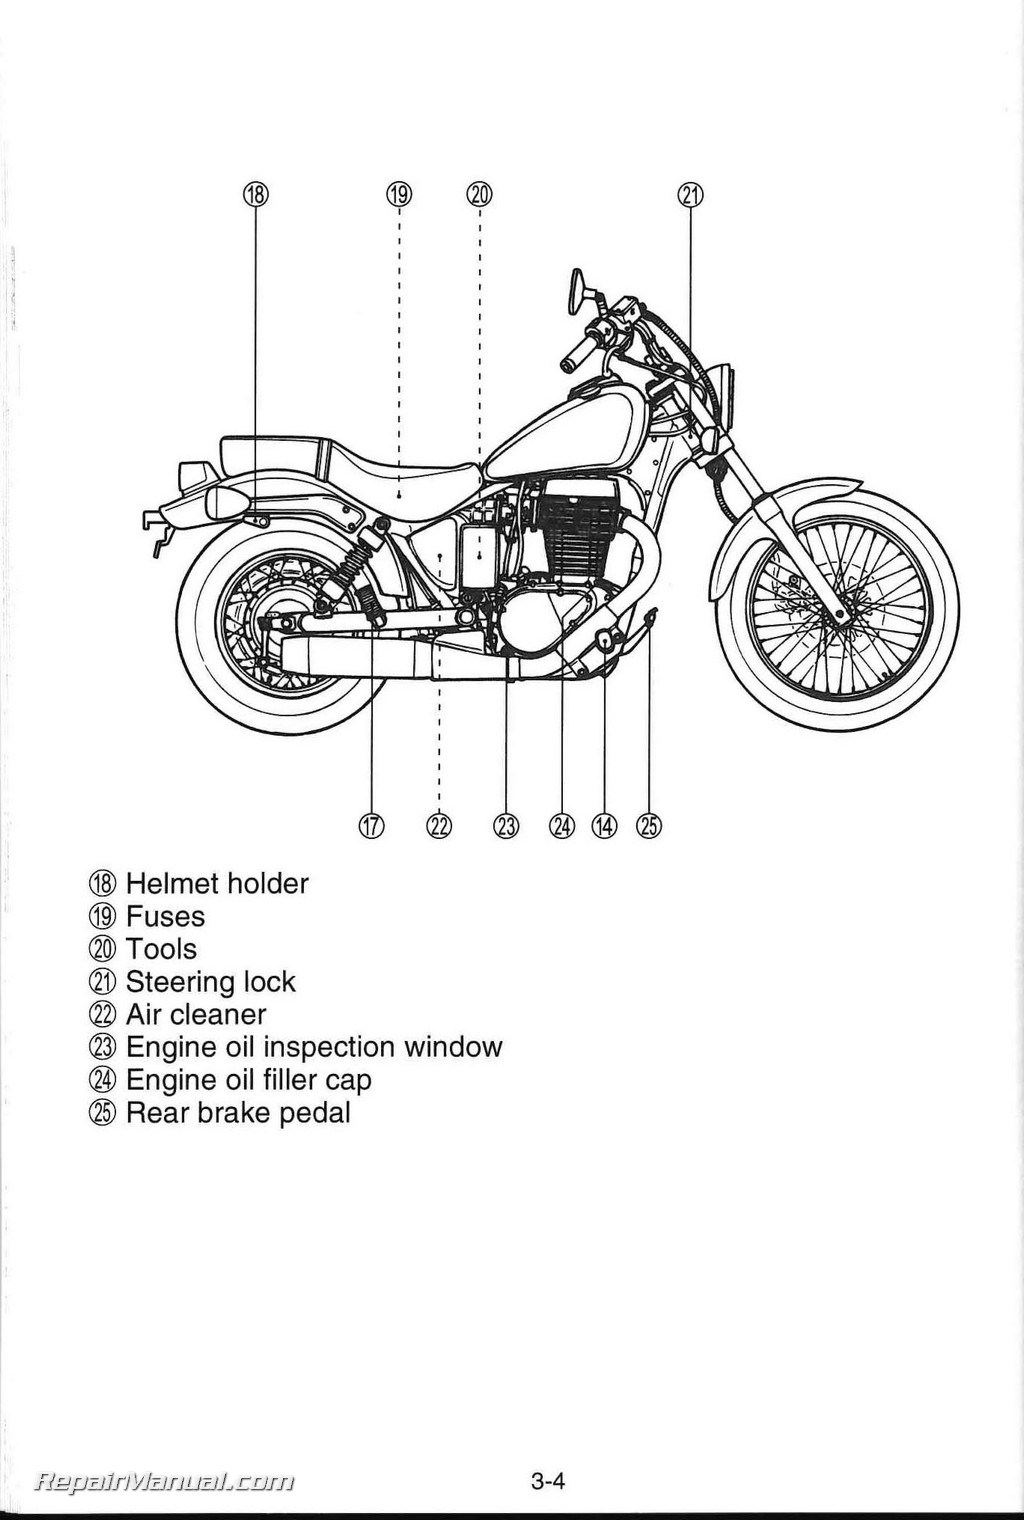 2009 Suzuki Boulevard S40 LS650 Motorcycle Owners Manual